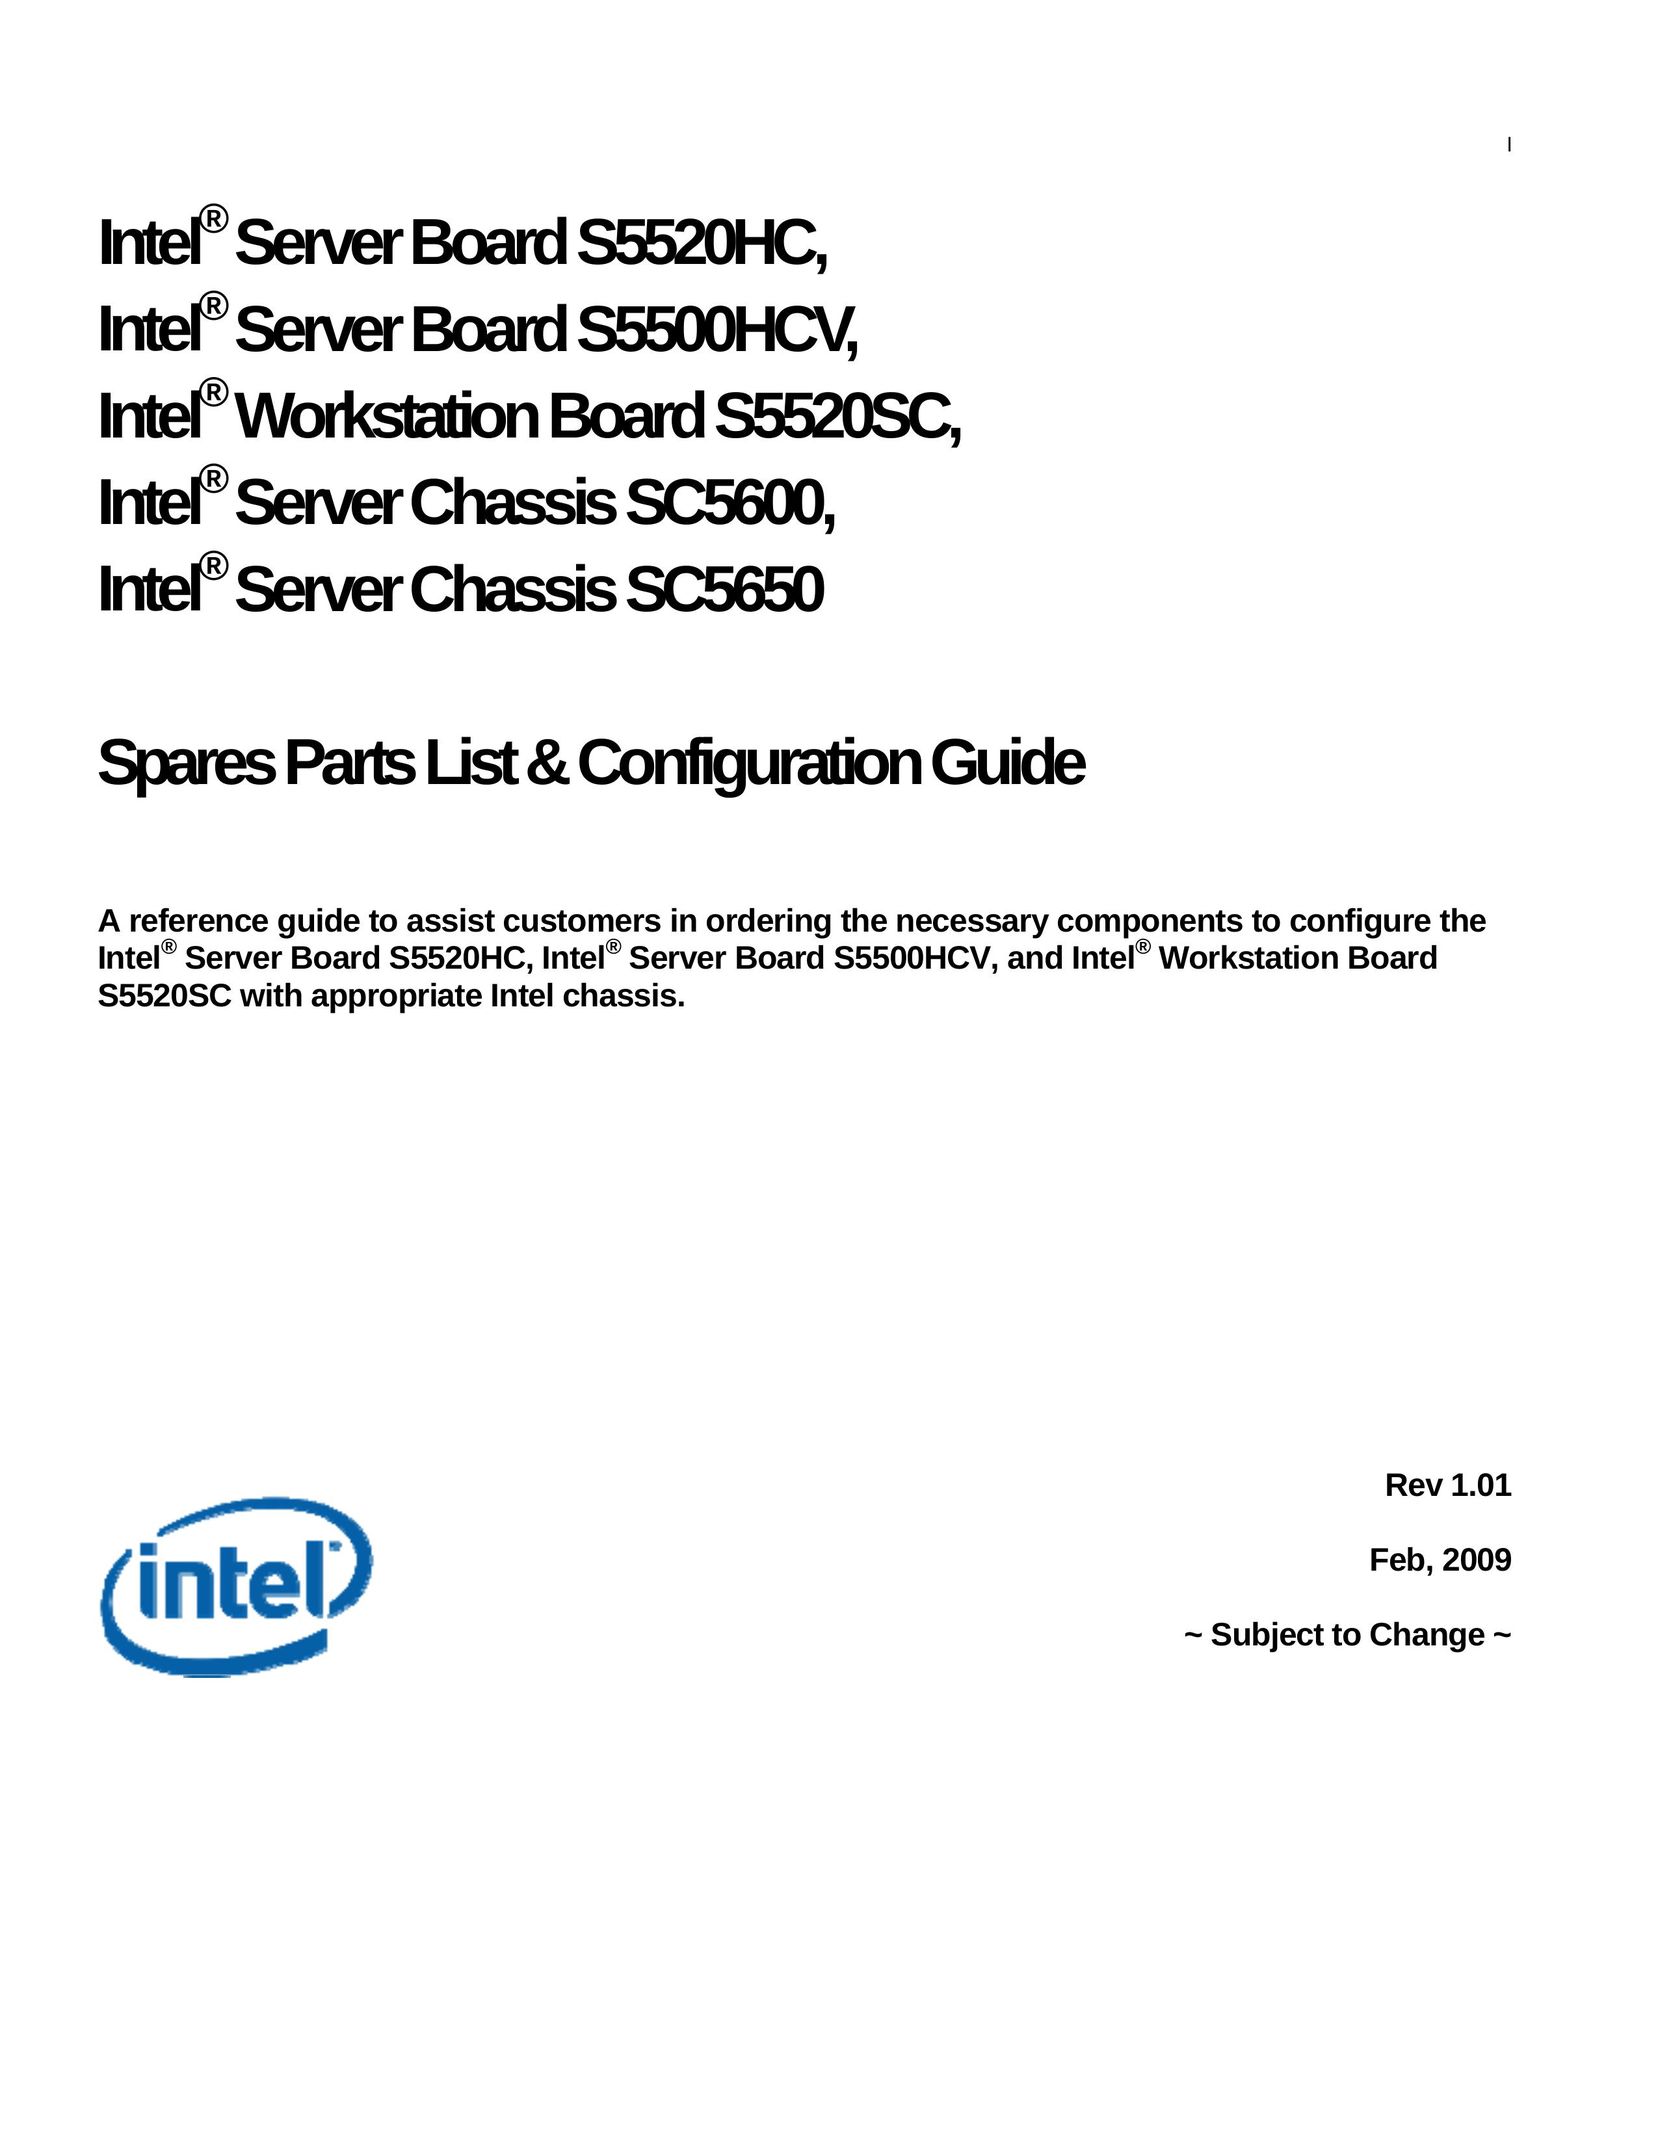 Intel SC5600 Server User Manual